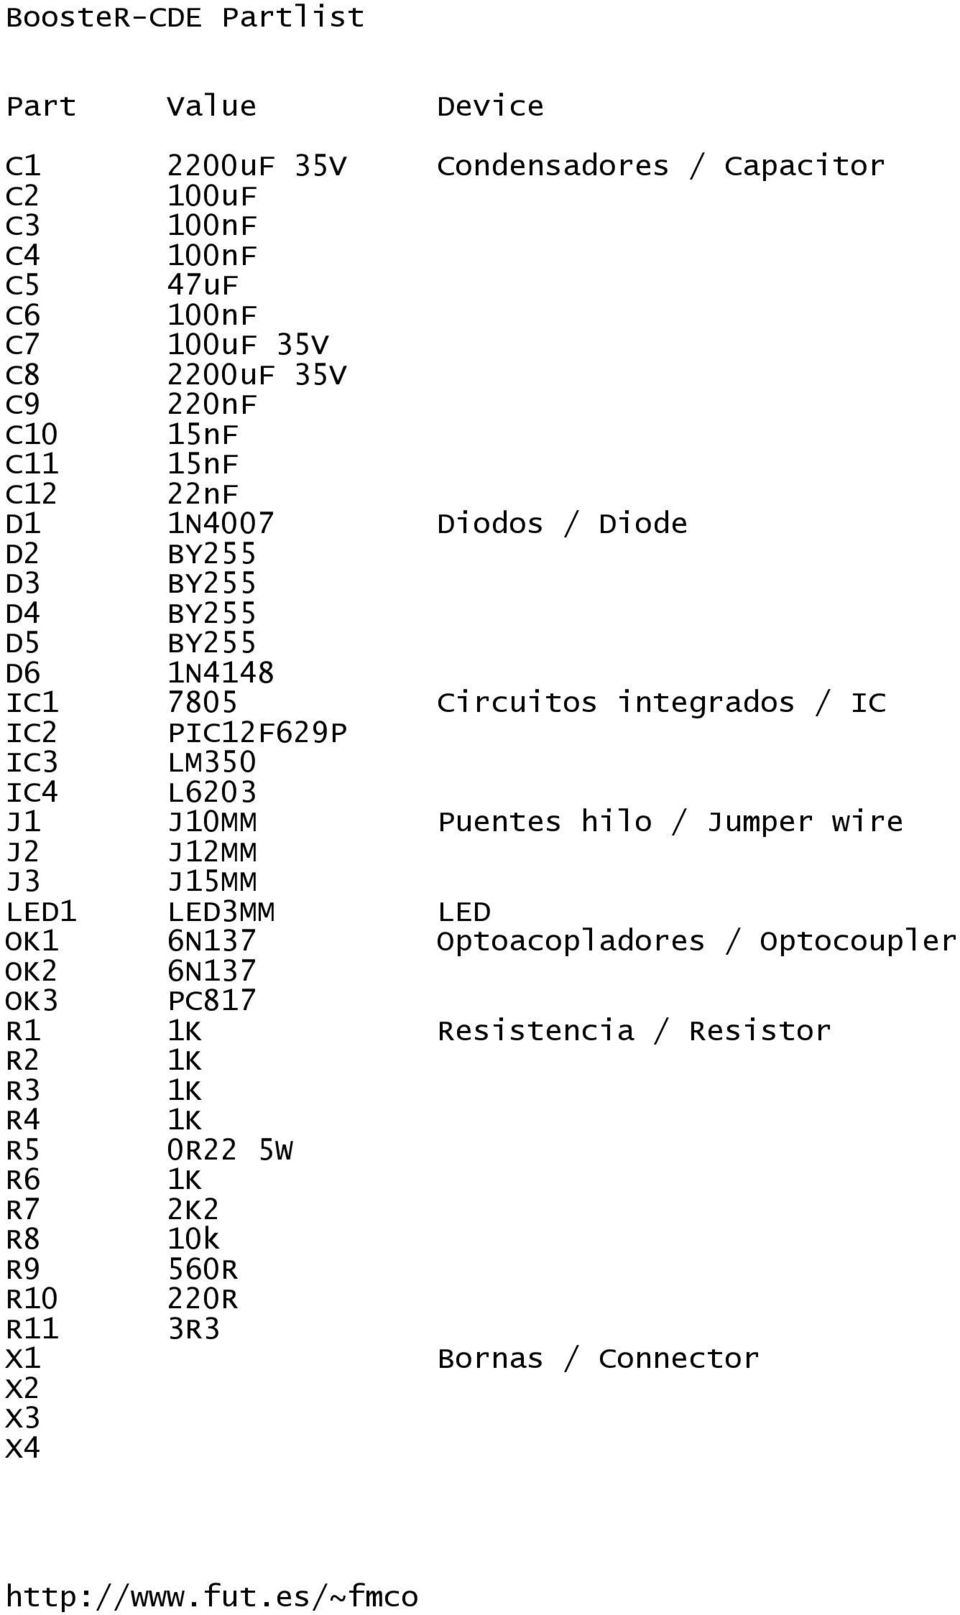 PIC12F629P IC3 LM350 IC4 L6203 J1 J10MM Puentes hilo / Jumper wire J2 J12MM J3 J15MM LED1 LED3MM LED OK1 6N137 Optoacopladores /